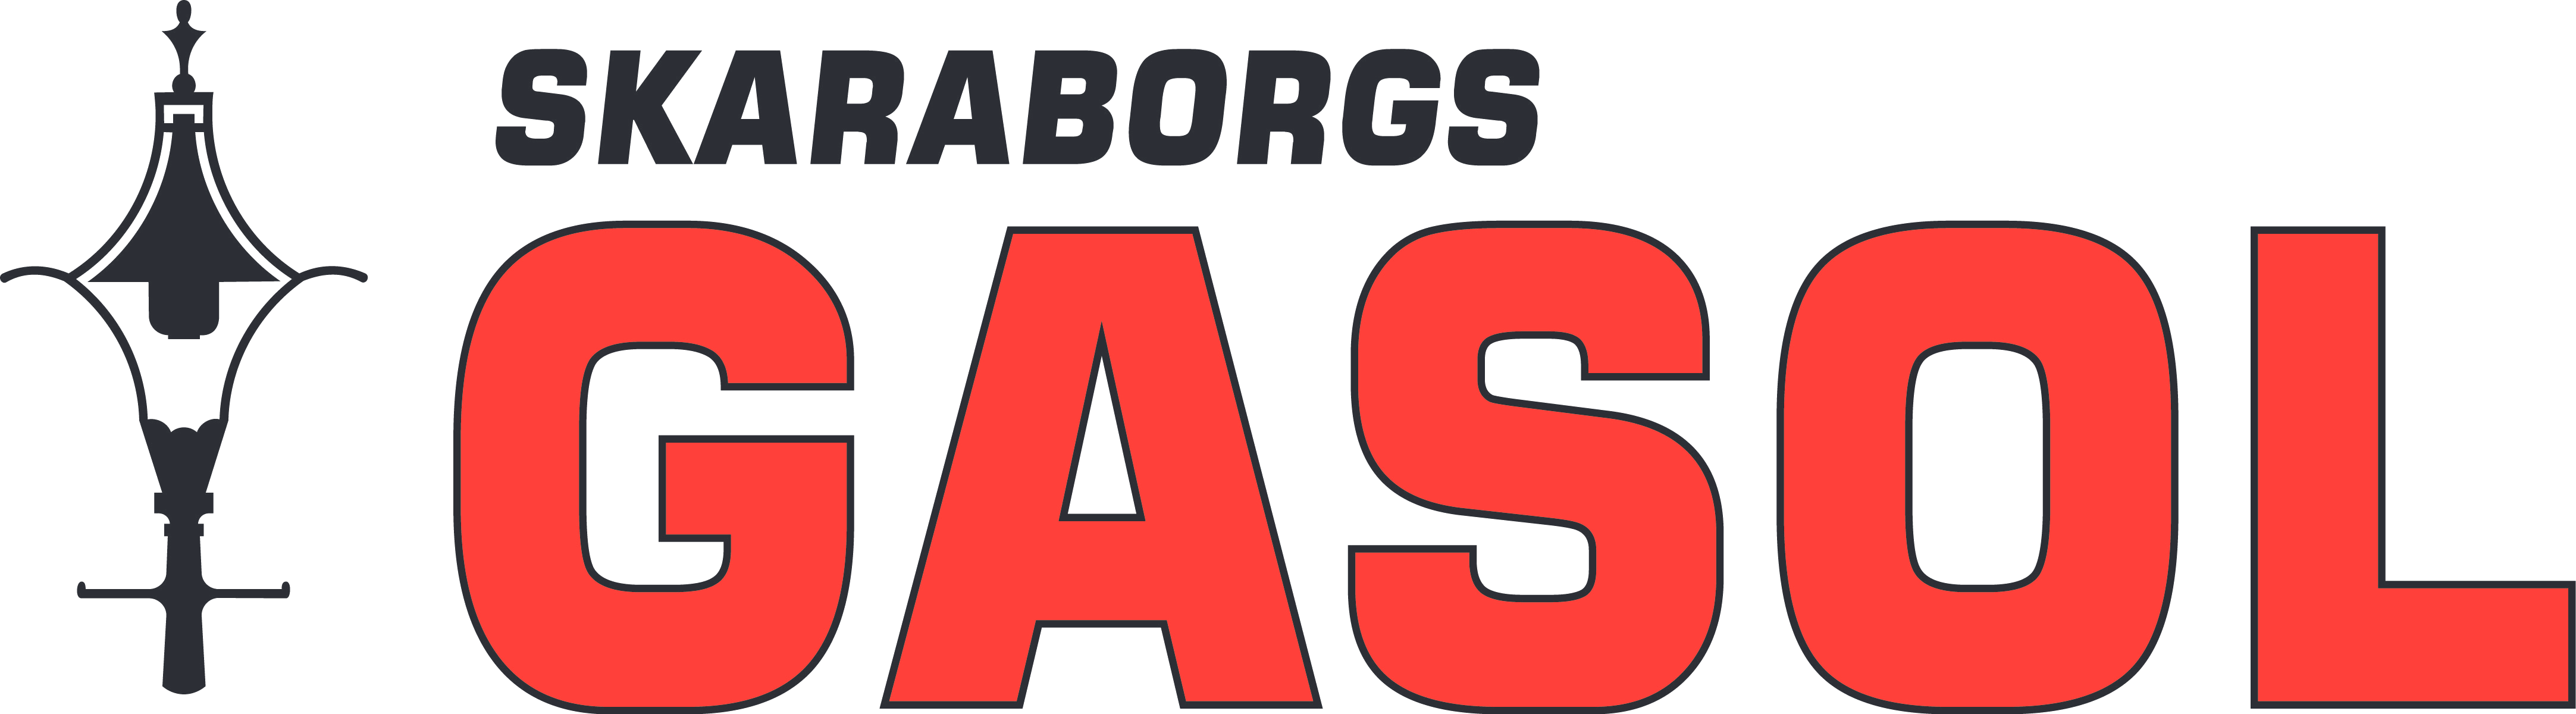 cropped-Skaraborgs_Gasol_logo-1.png